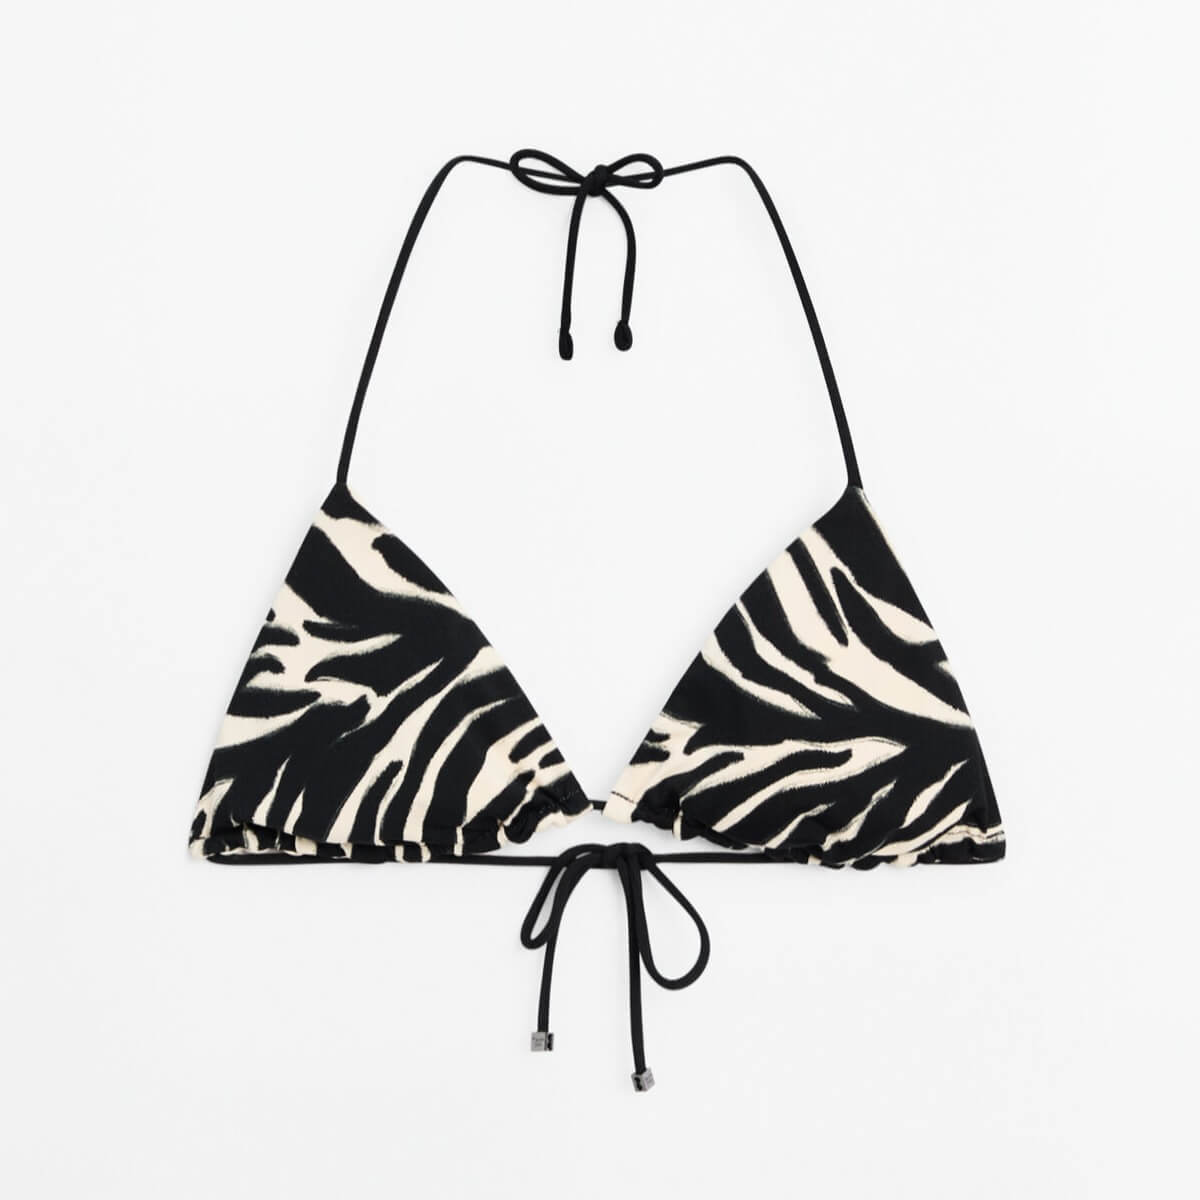 Верх купальника Massimo Dutti Printed Triangle Bikini, черный/белый верх от купальника с треугольными чашечками java xl каштановый